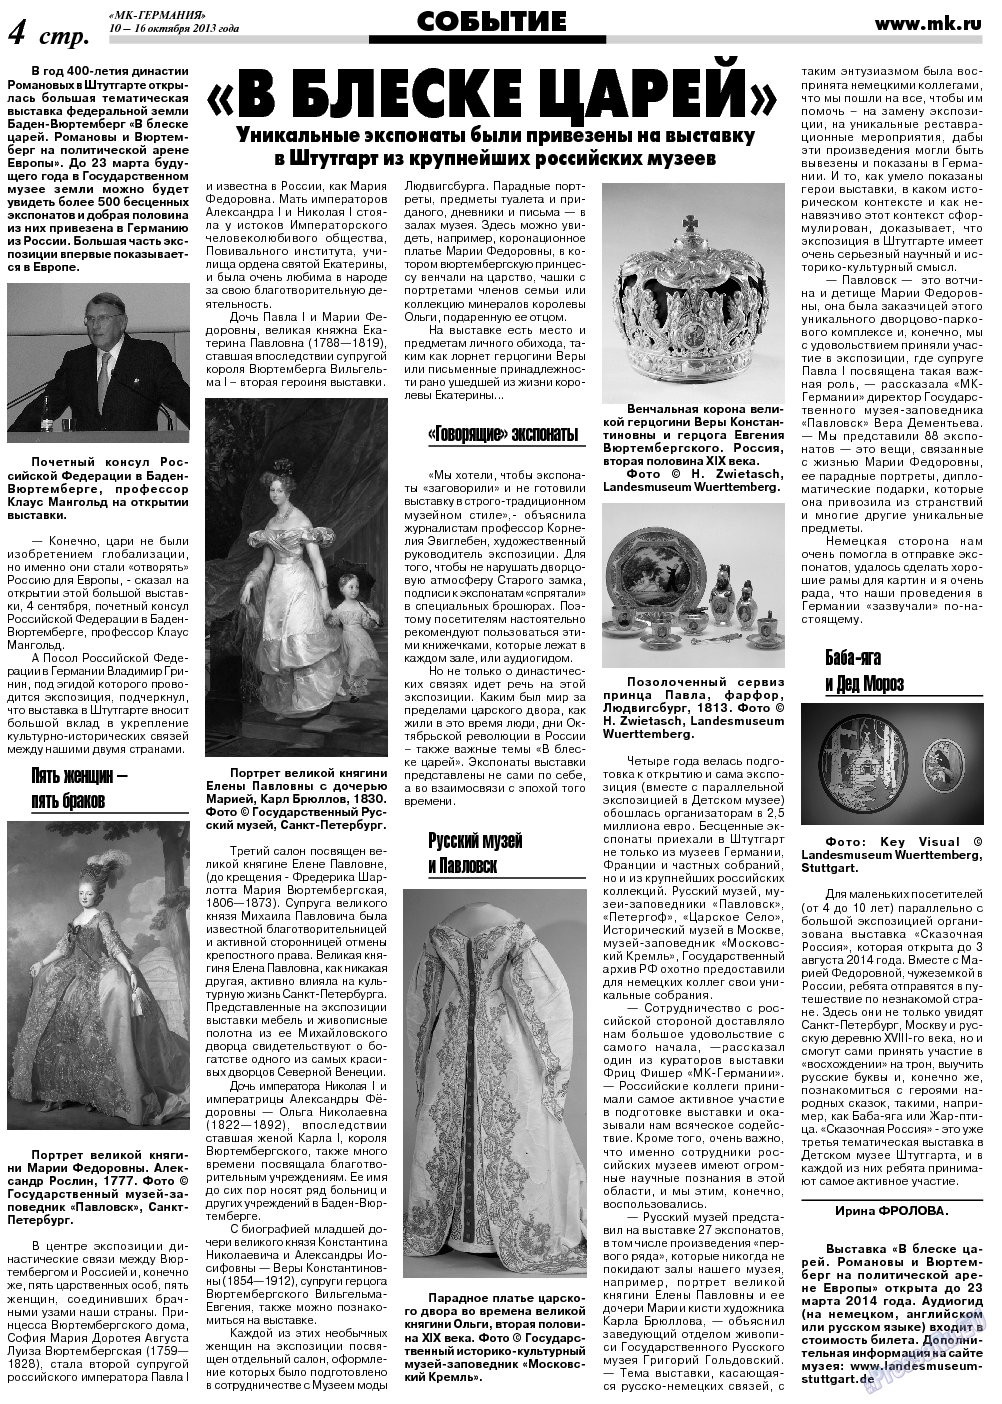 МК-Германия, газета. 2013 №41 стр.4